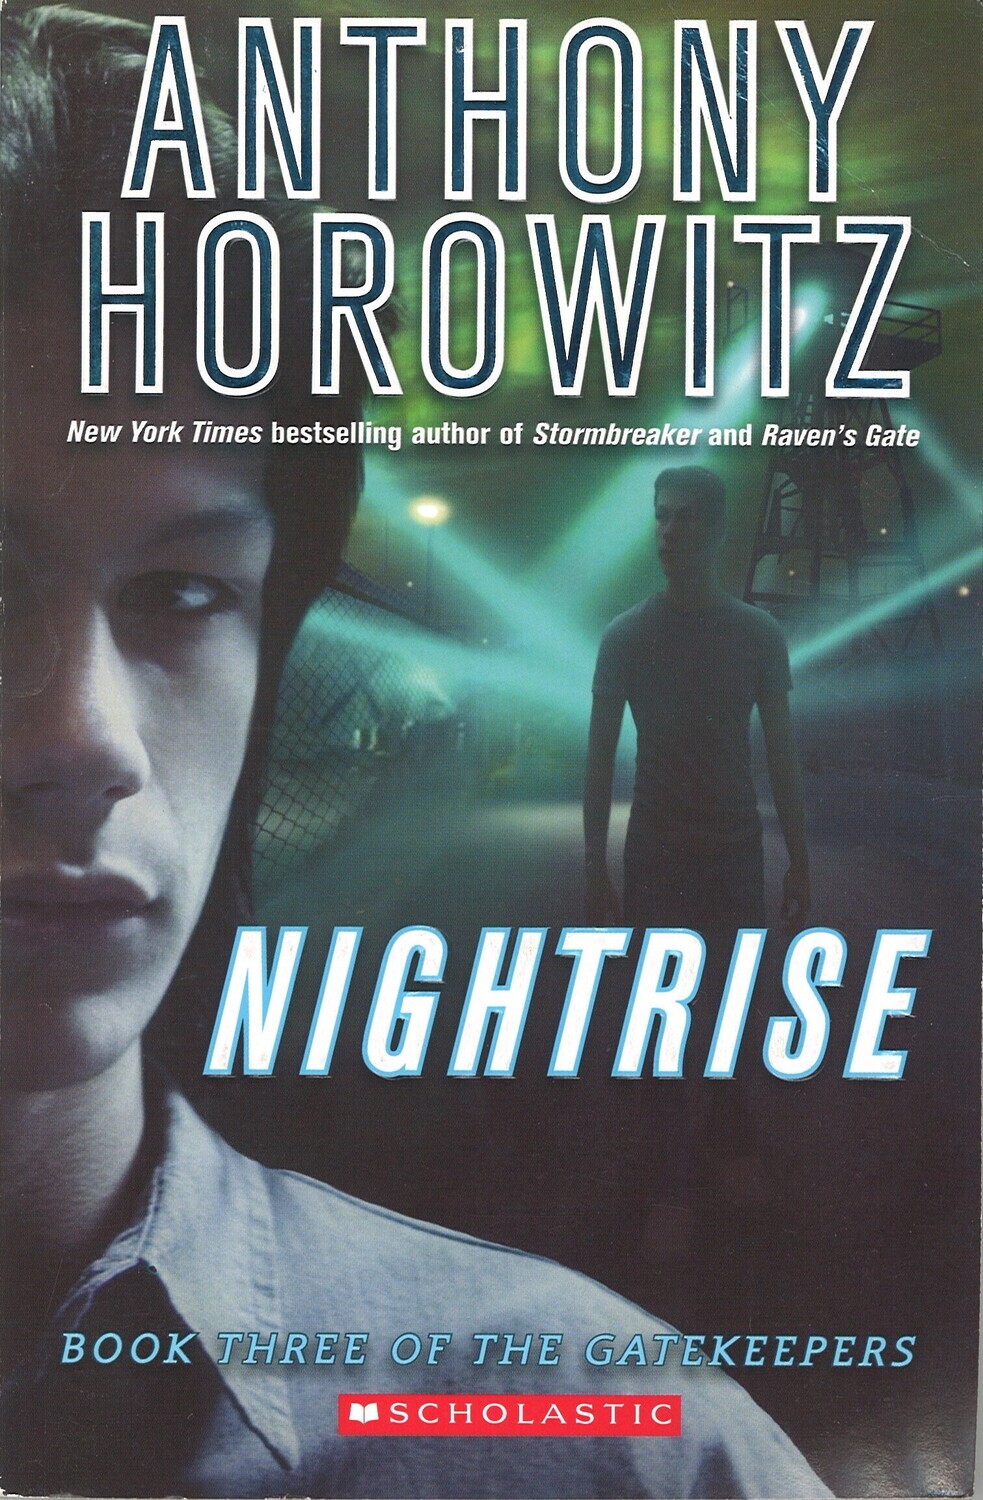 Nightrise (The Gatekeepers series Book 3)